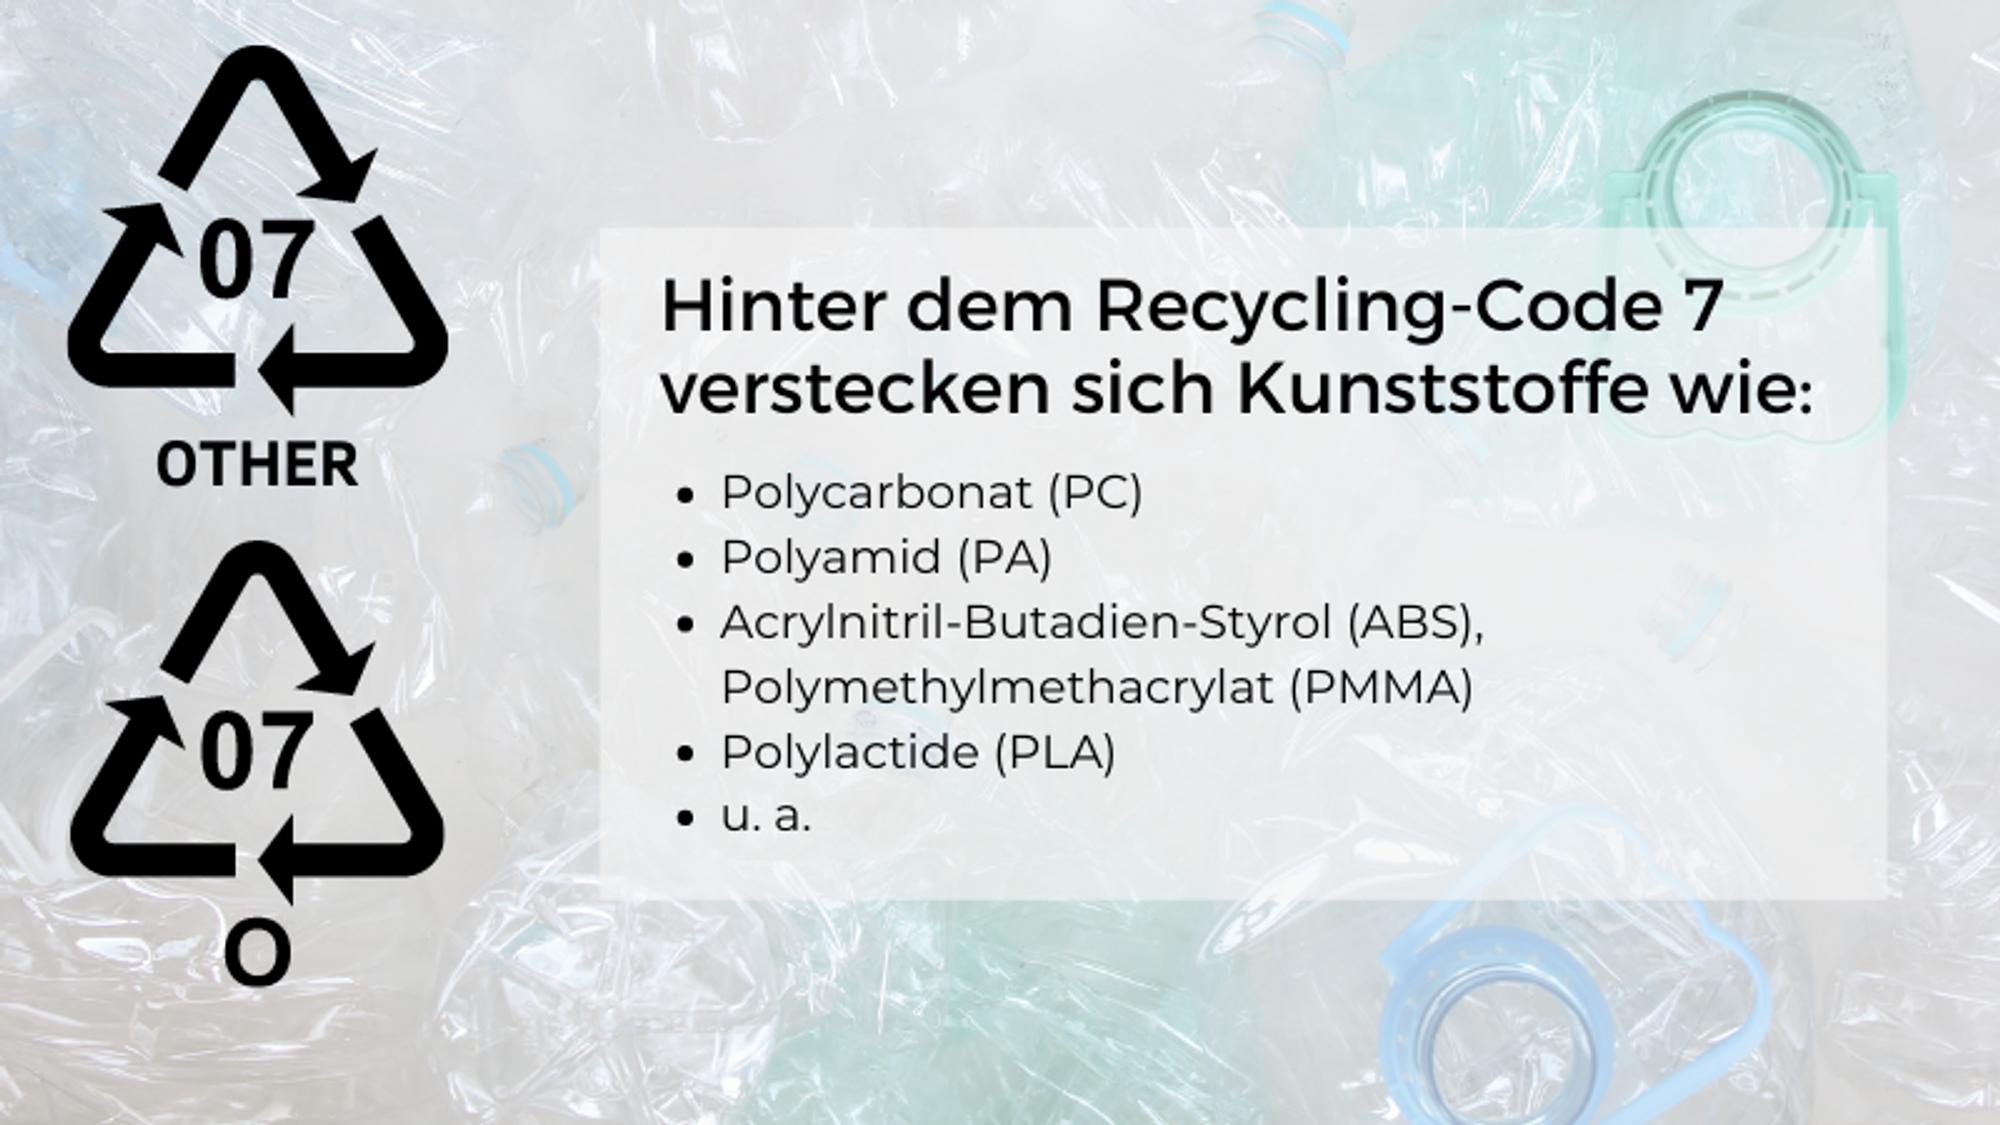 Diese Kunststoffe verbergen sich hinter dem Recycling-Code 7